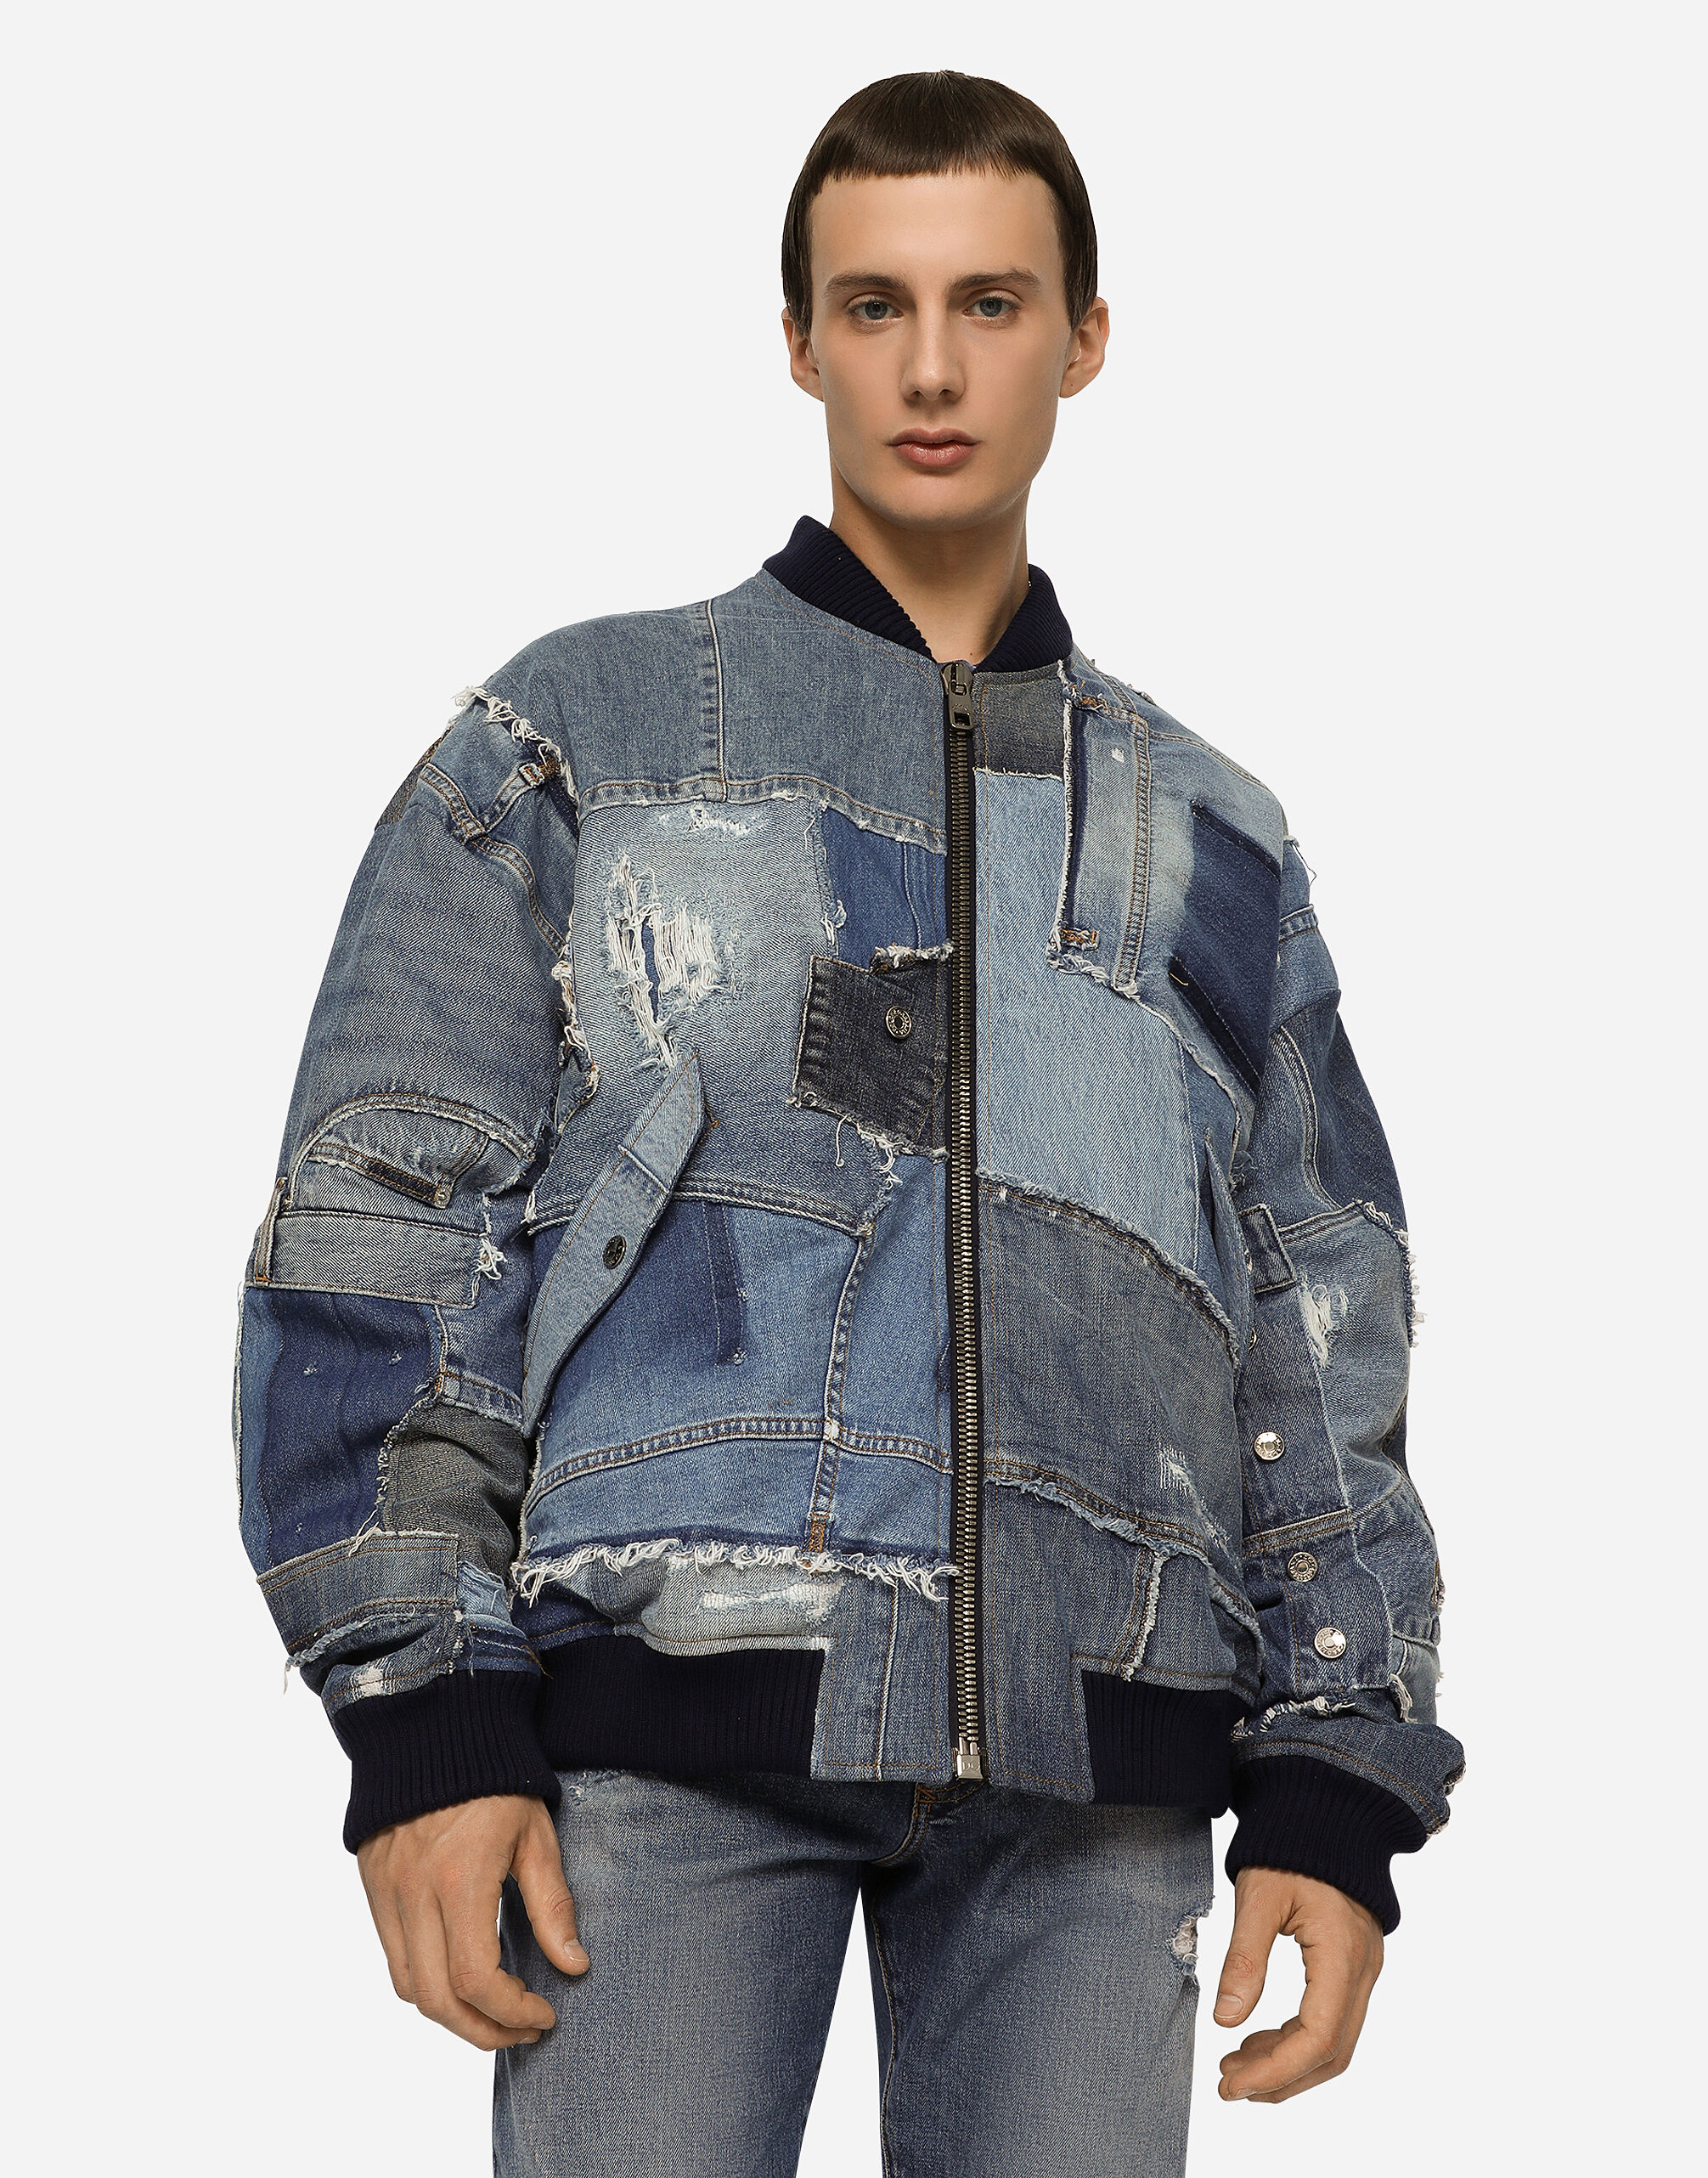 Multi-Layered Panels Denim Jacket | Hype Streetwear - RADPRESENT